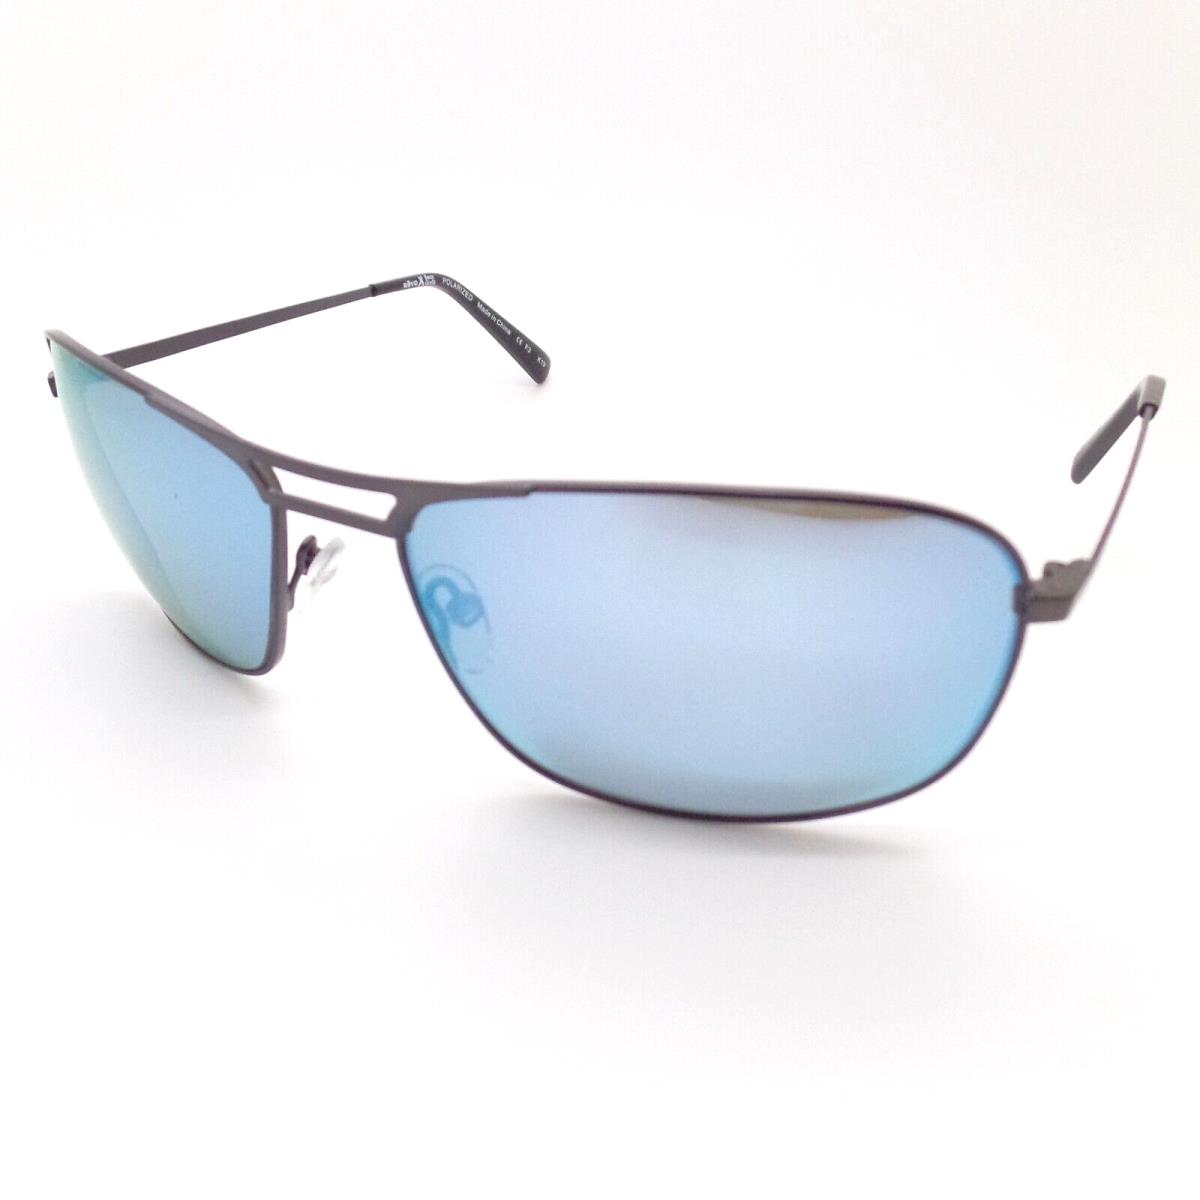 Revo sunglasses  - Matte Dark Gunmetal Frame 0